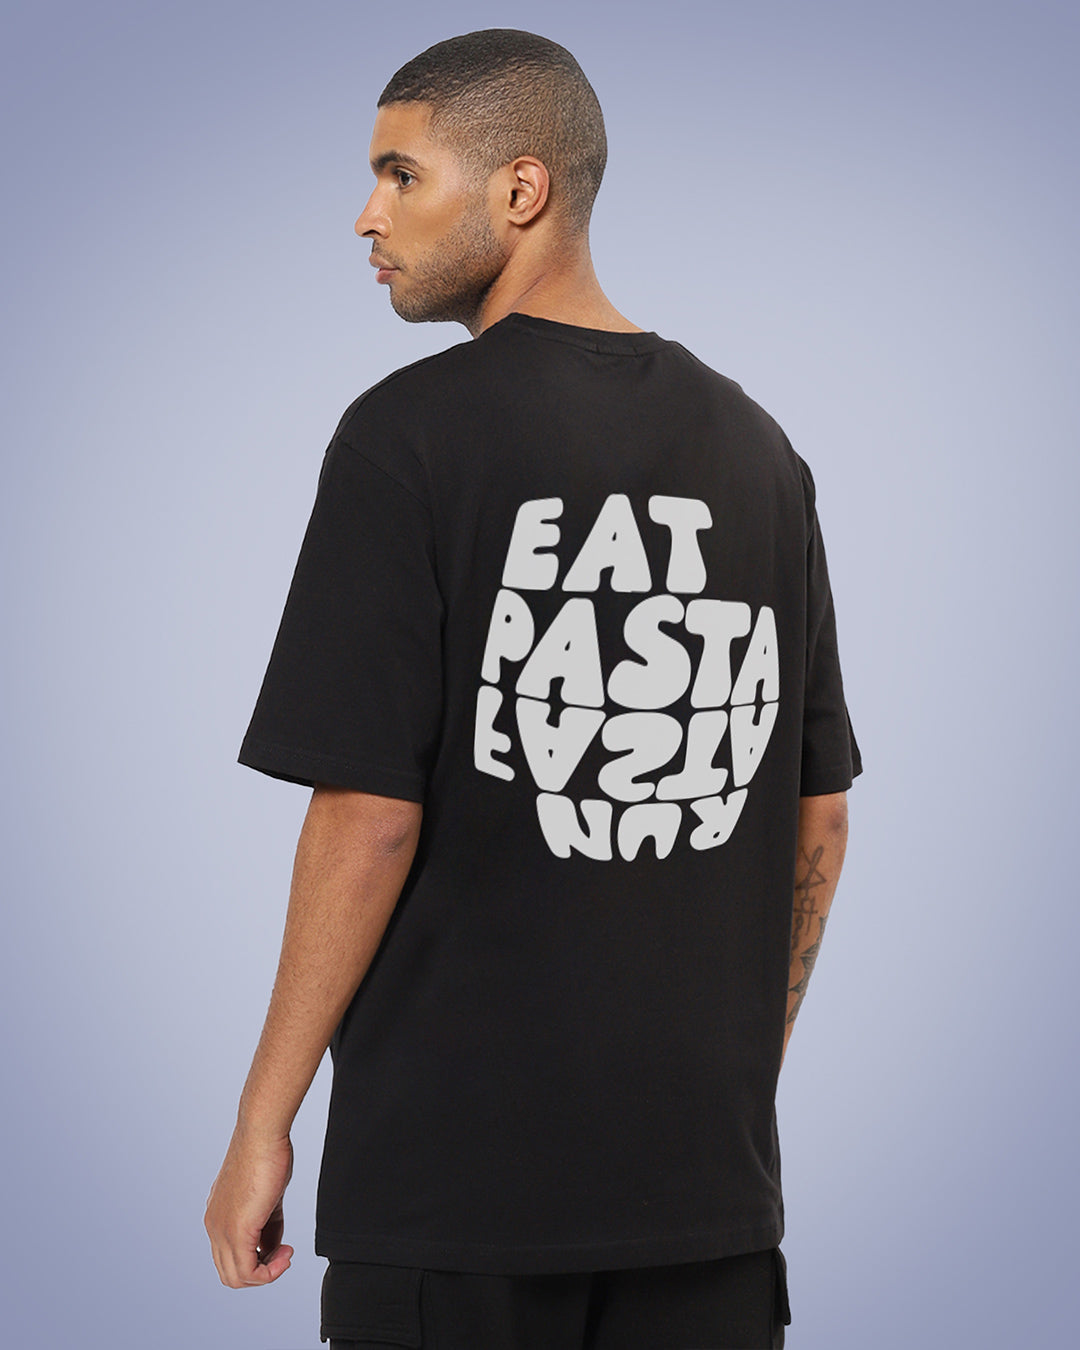 Eat Pasta Run Fasta Oversized Men's Tshirt